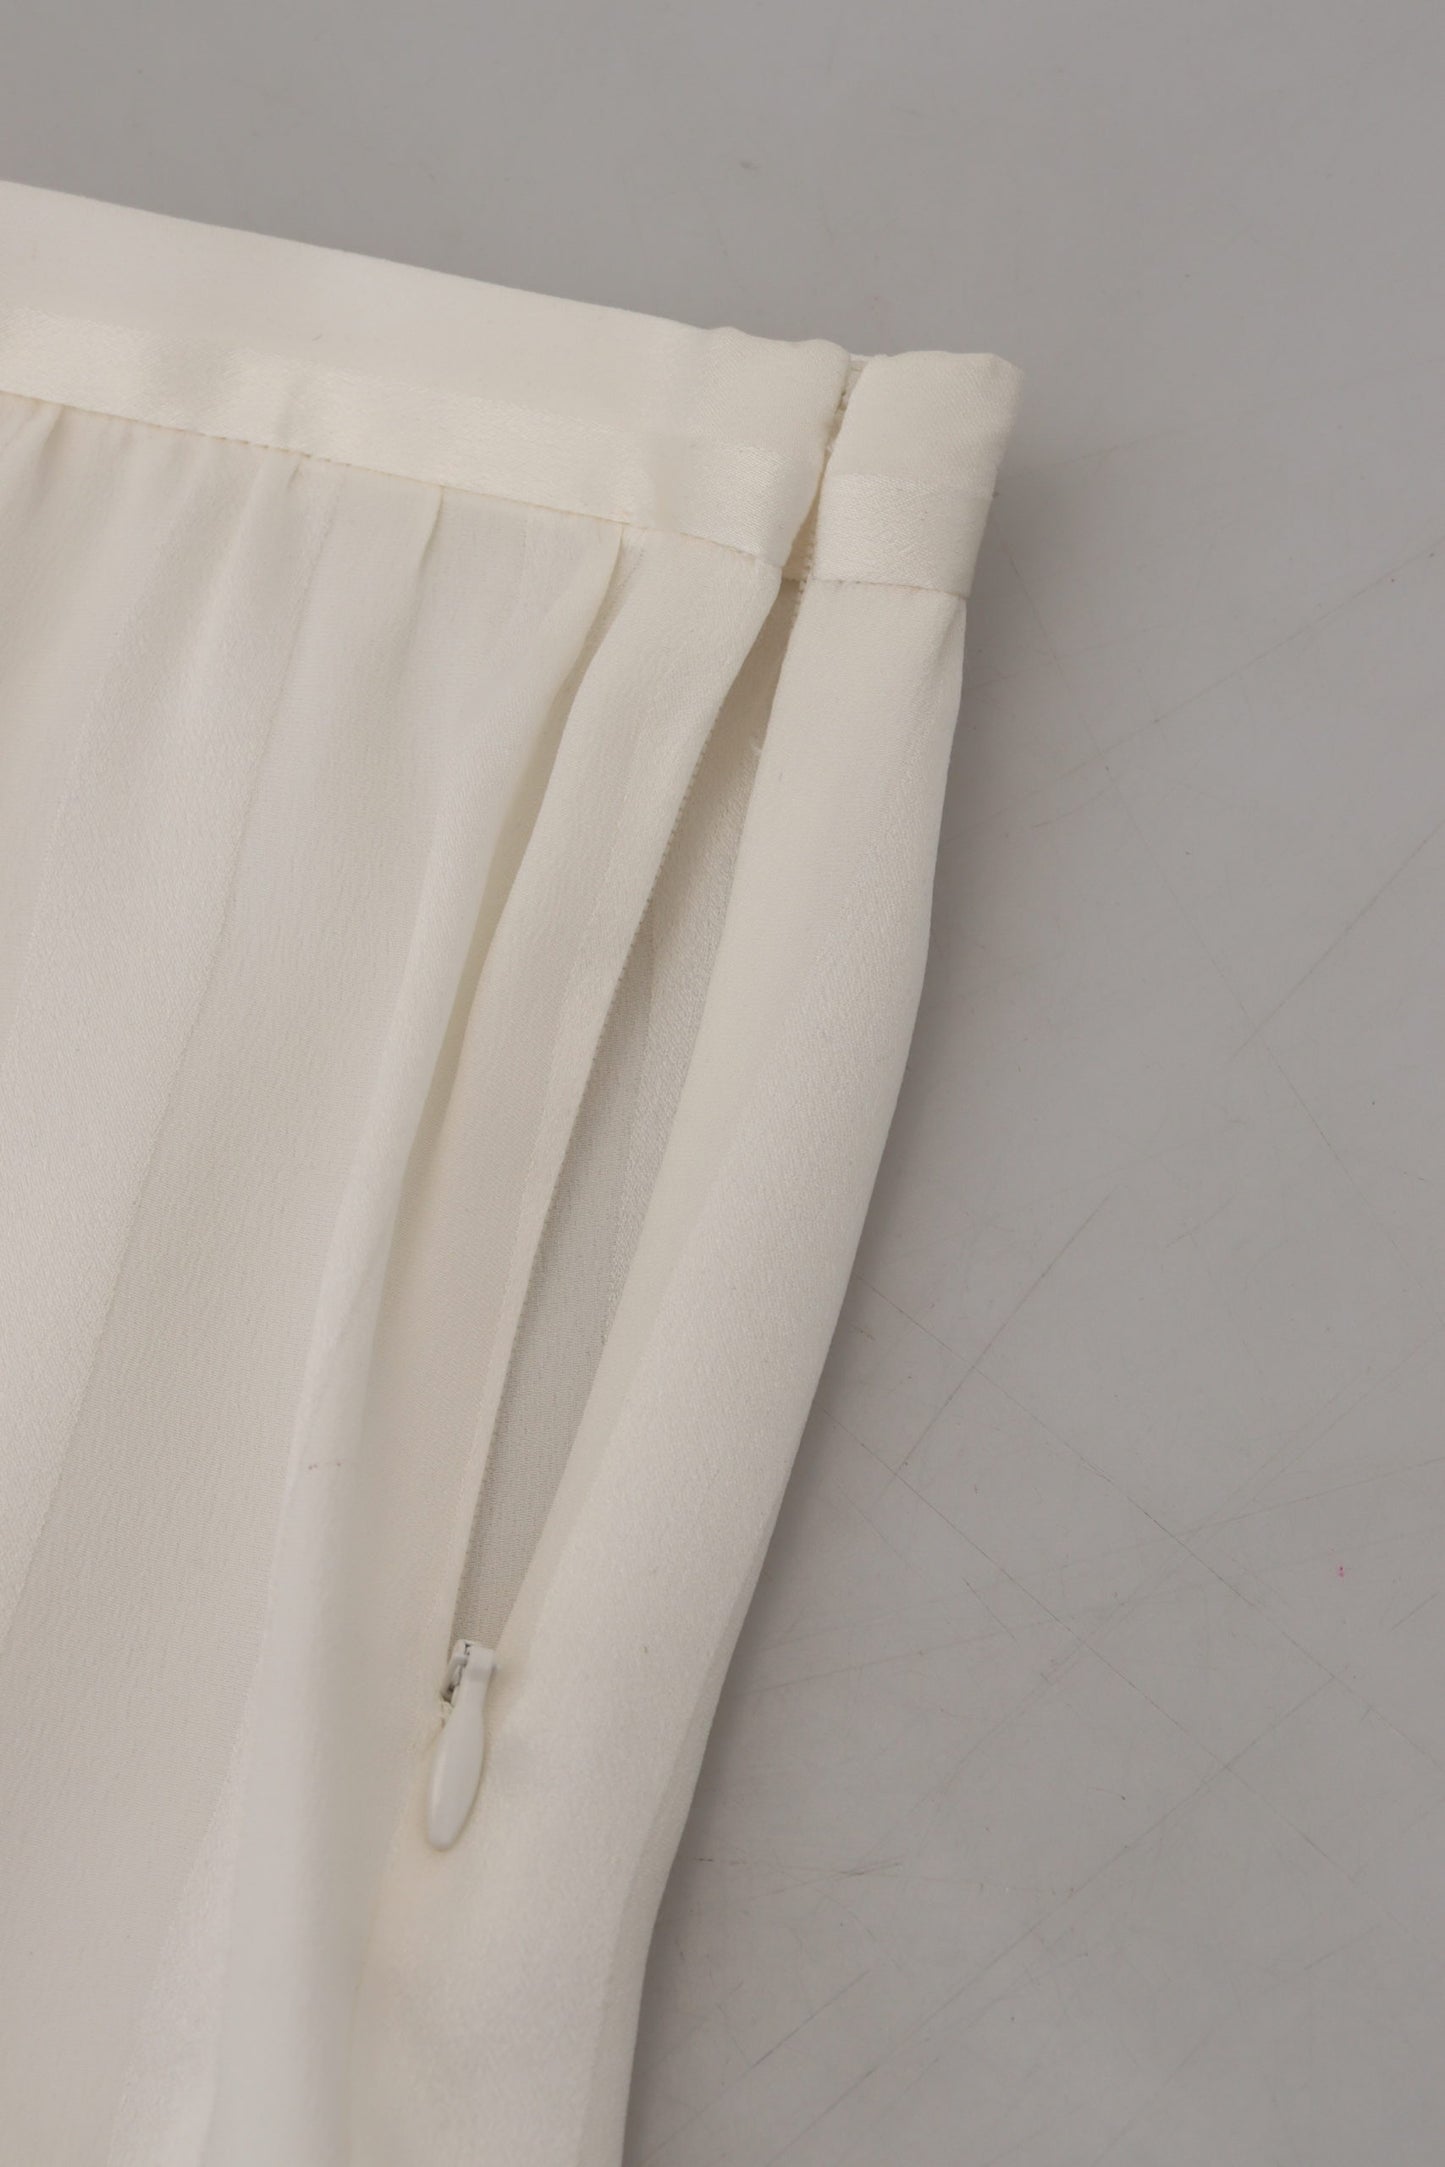 White Silk Floral Lace Lingerie Underwear